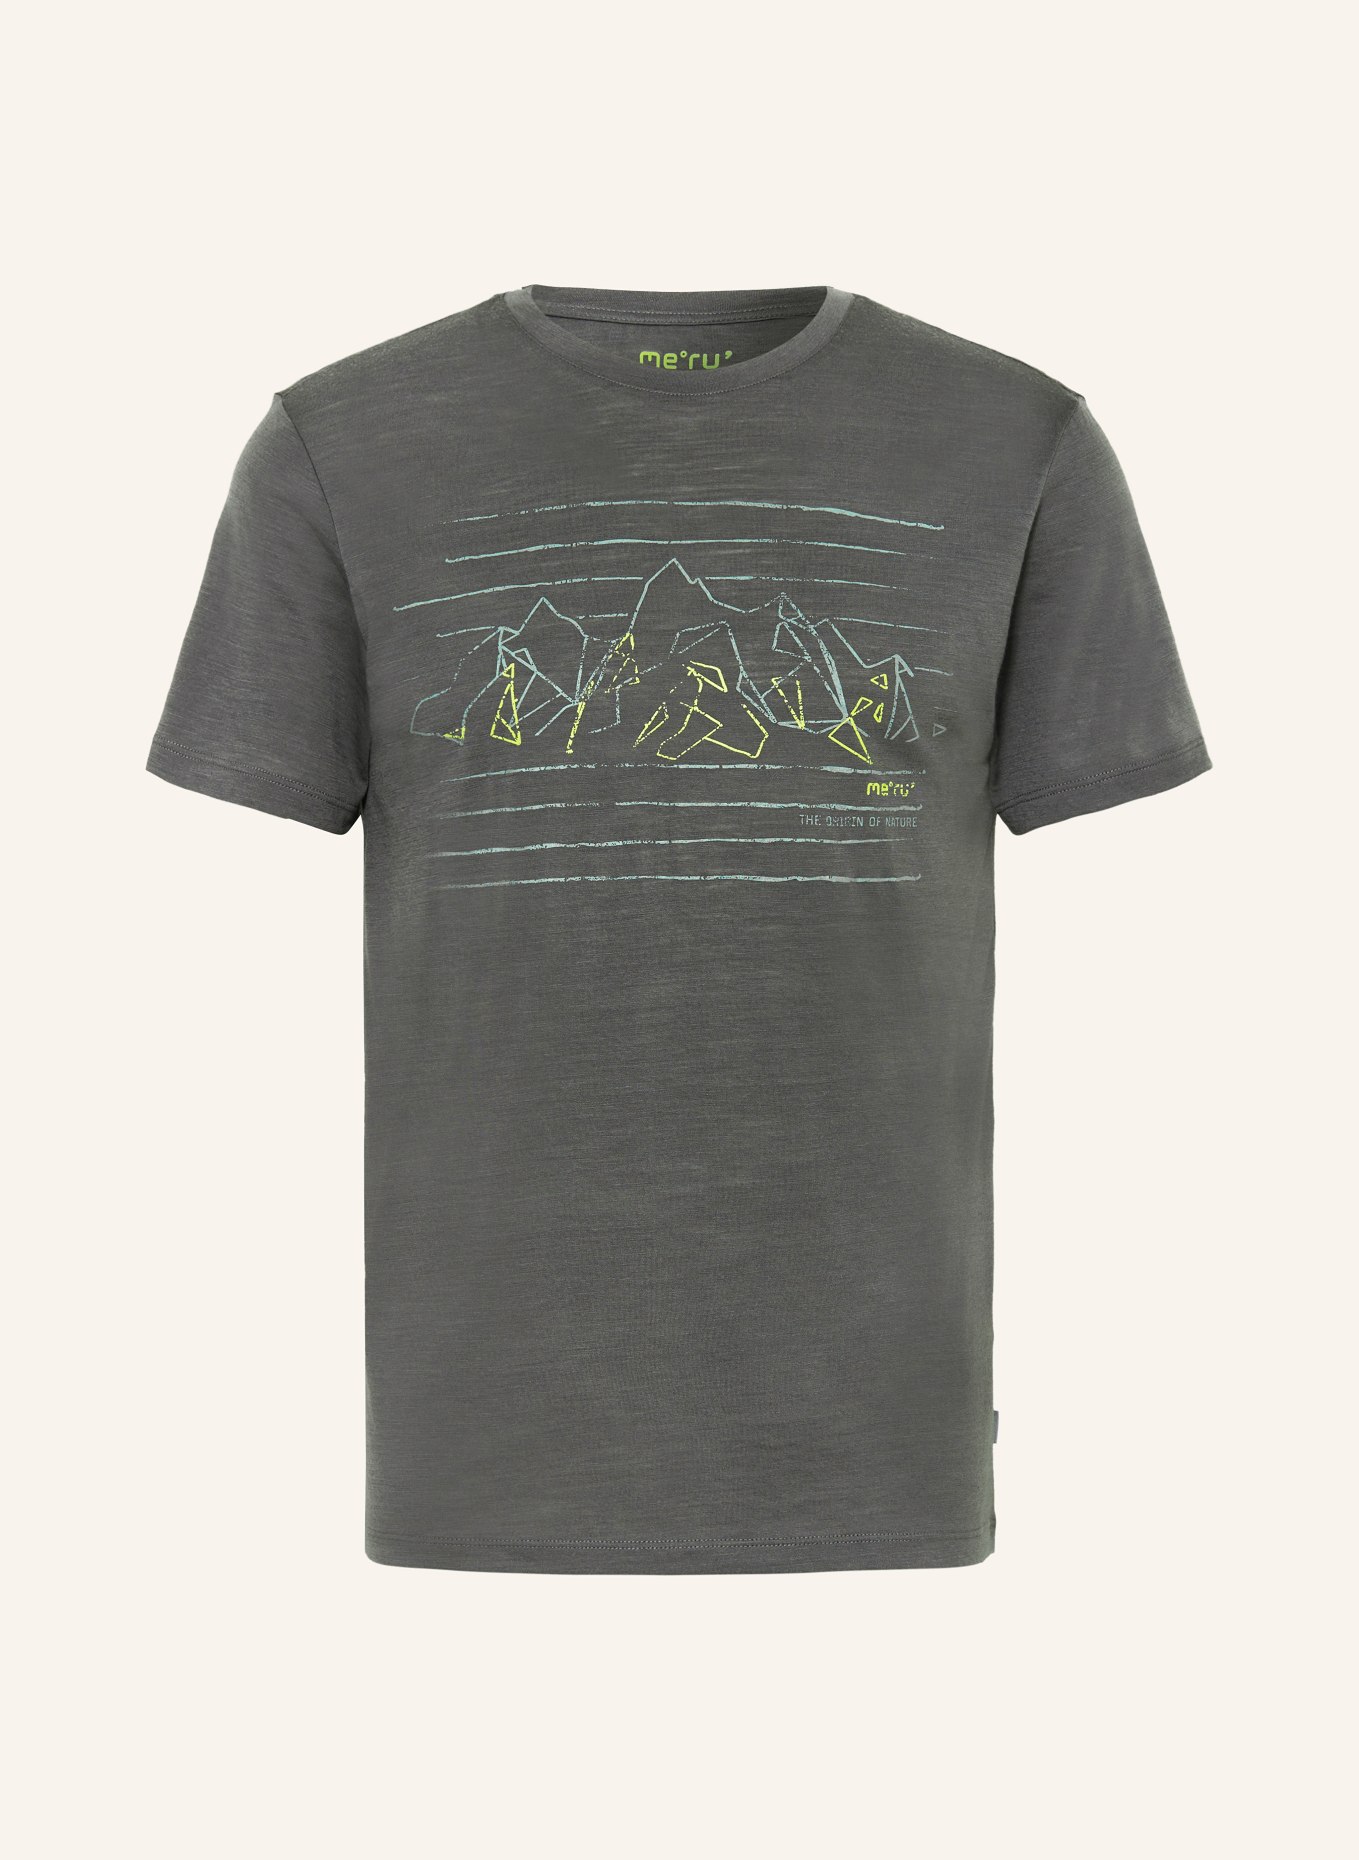 me°ru' T-shirt LORDELO, Kolor: SZARY (Obrazek 1)